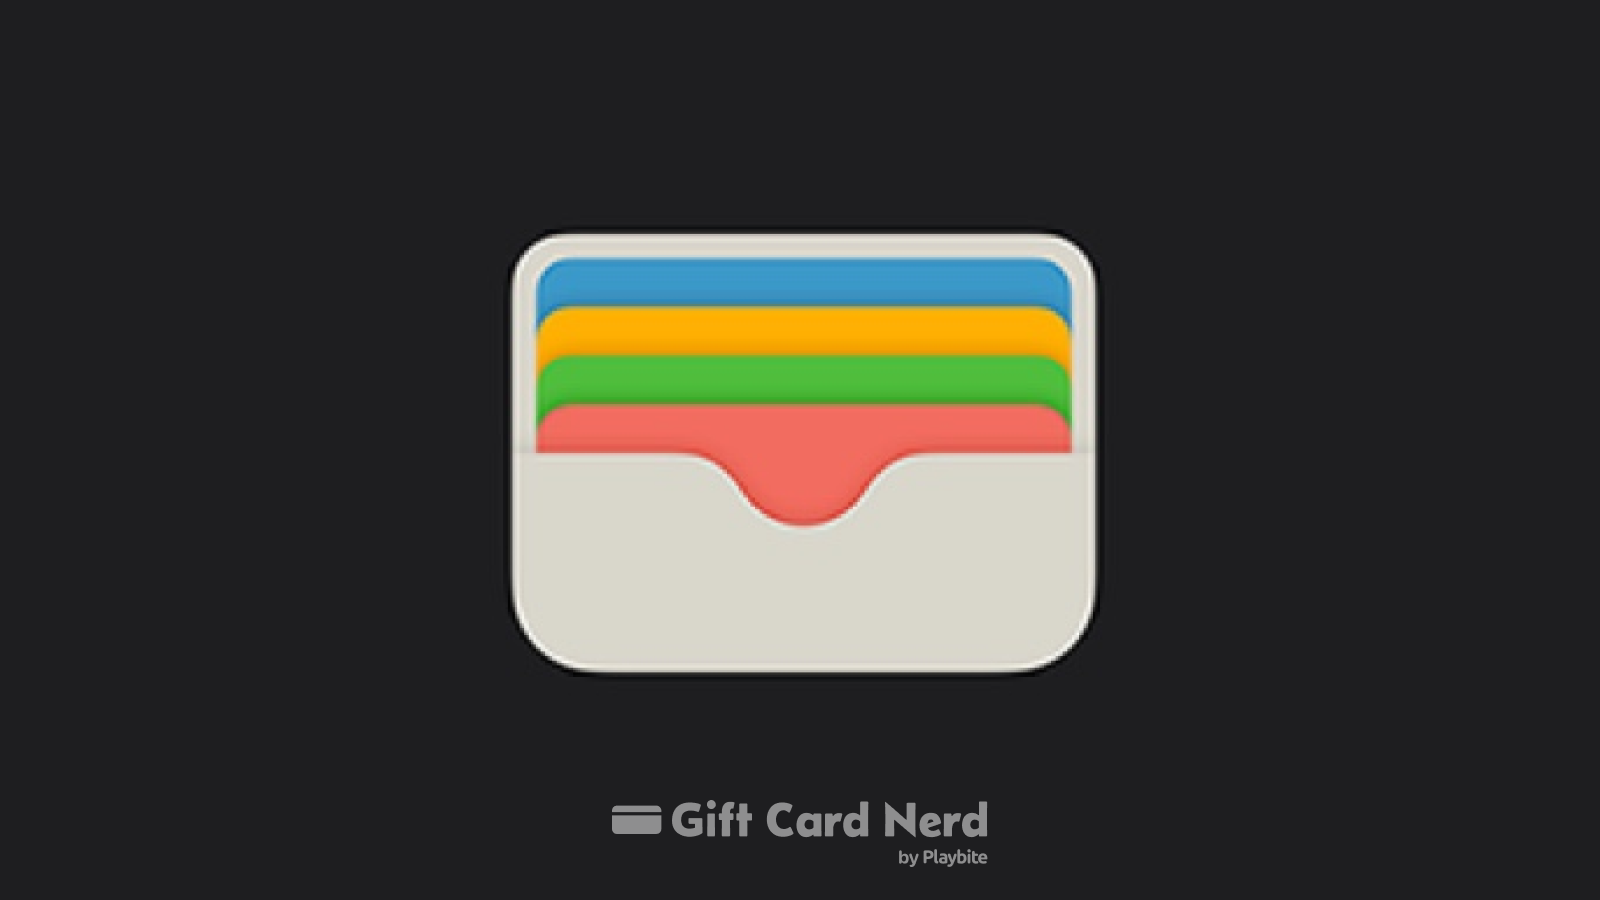 Can I Use an Apple Gift Card on Grubhub?